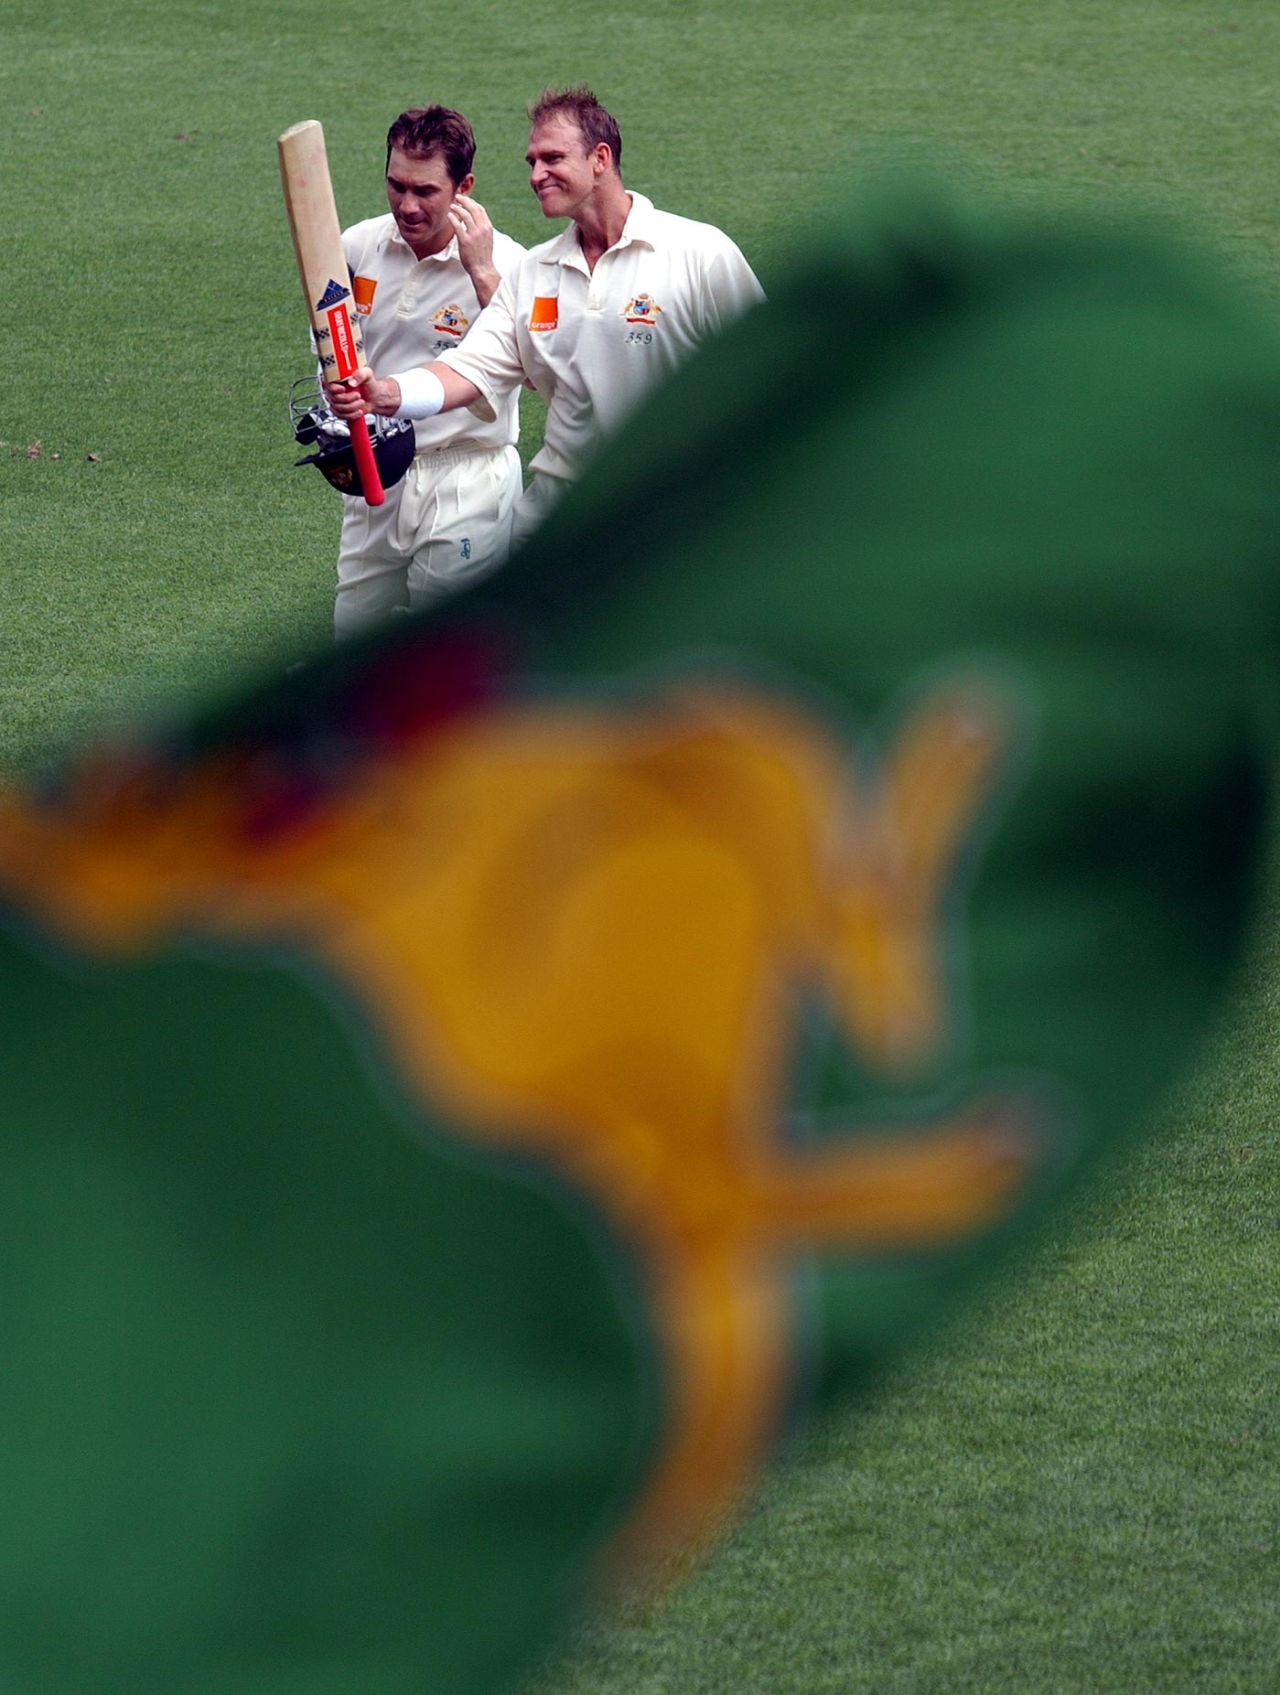 Matthew Hayden and Justin Langer walk off the field at tea on day one, Australia v New Zealand, 1st Test, Brisbane, November 12, 2001